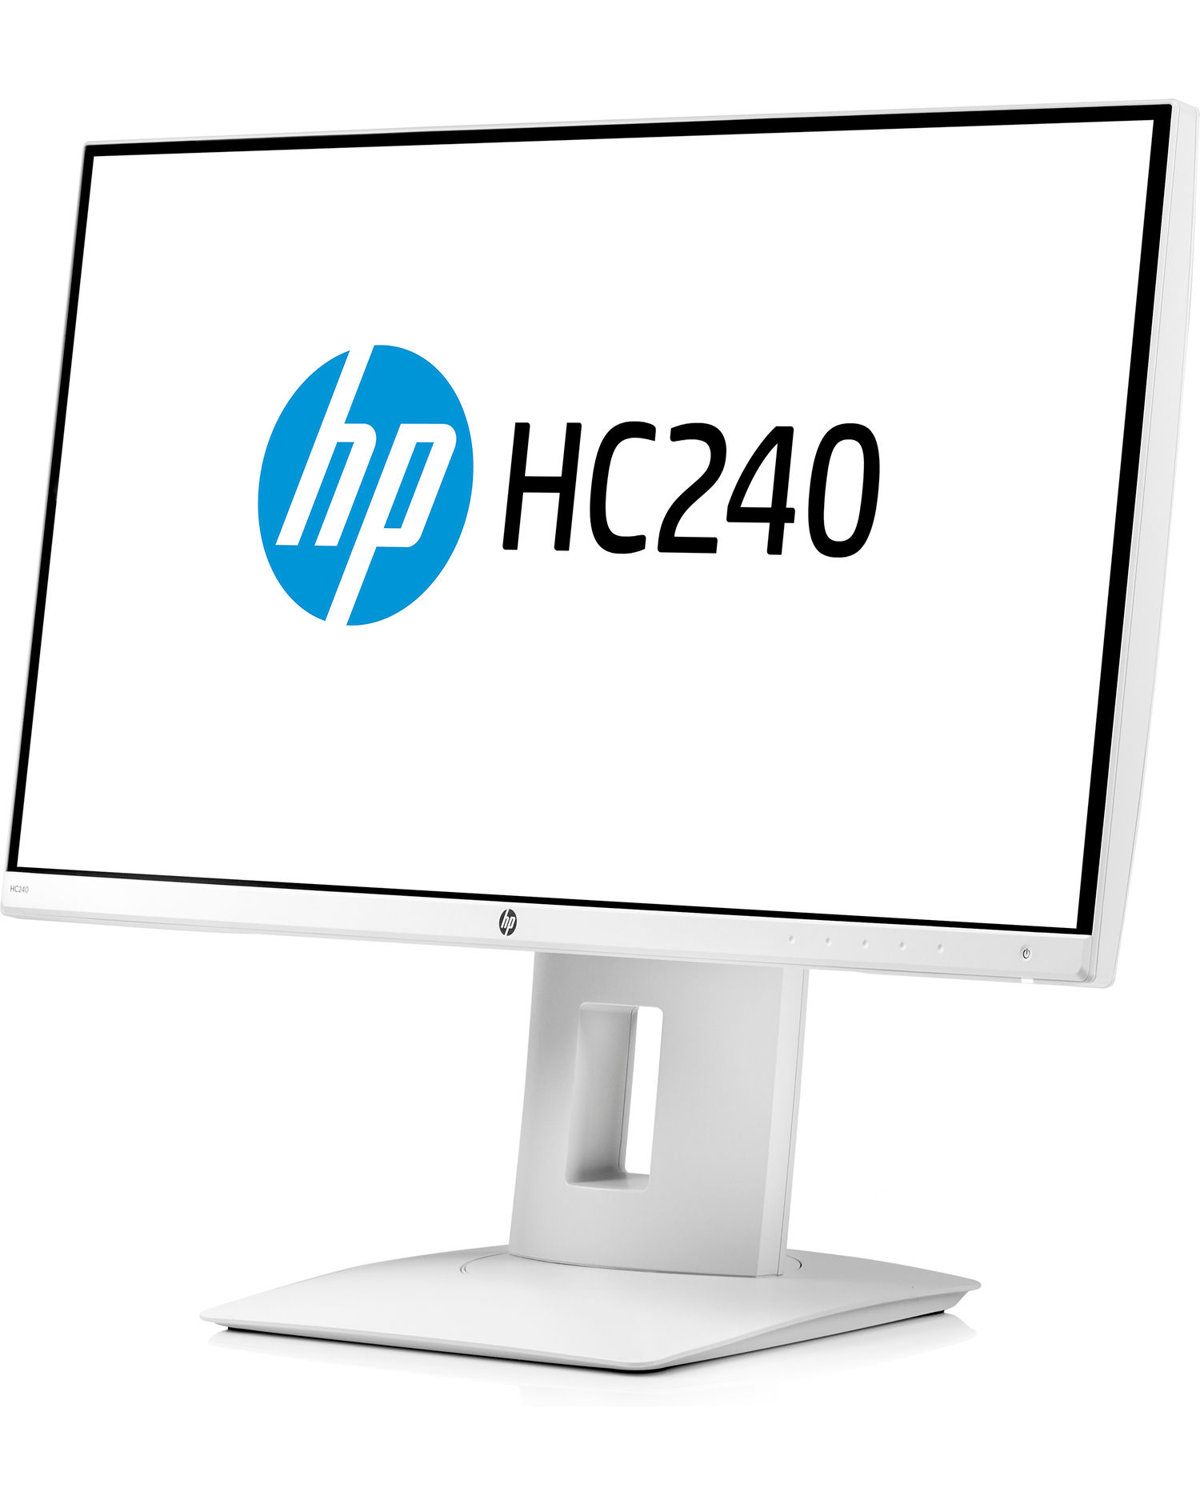 HP HC240 Healthcare Edition Display